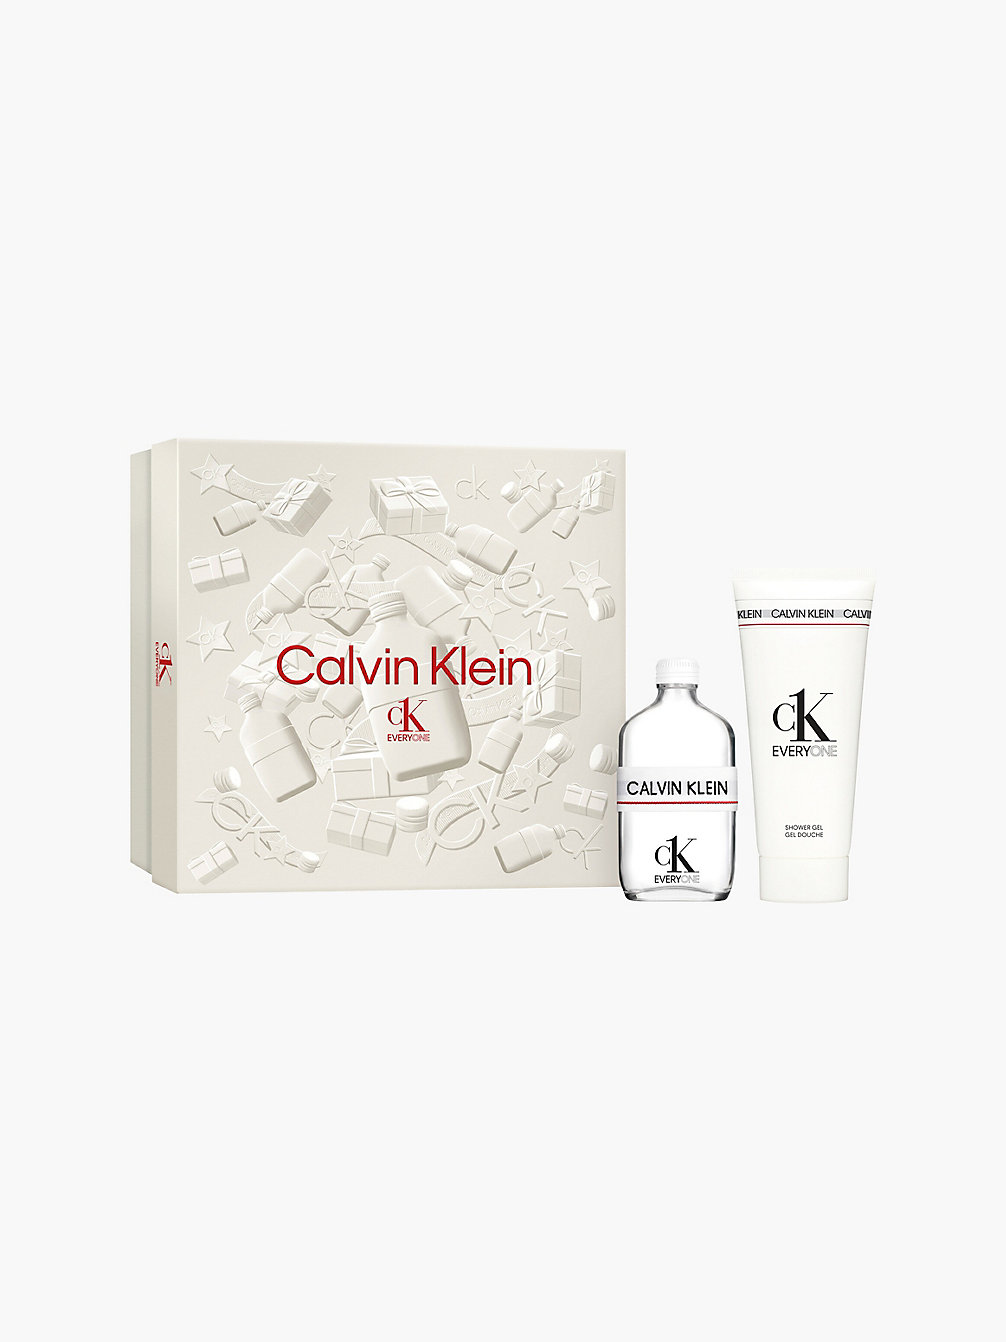 MULTI CK Everyone - Eau De Toilette Set Regalo undefined unisex Calvin Klein